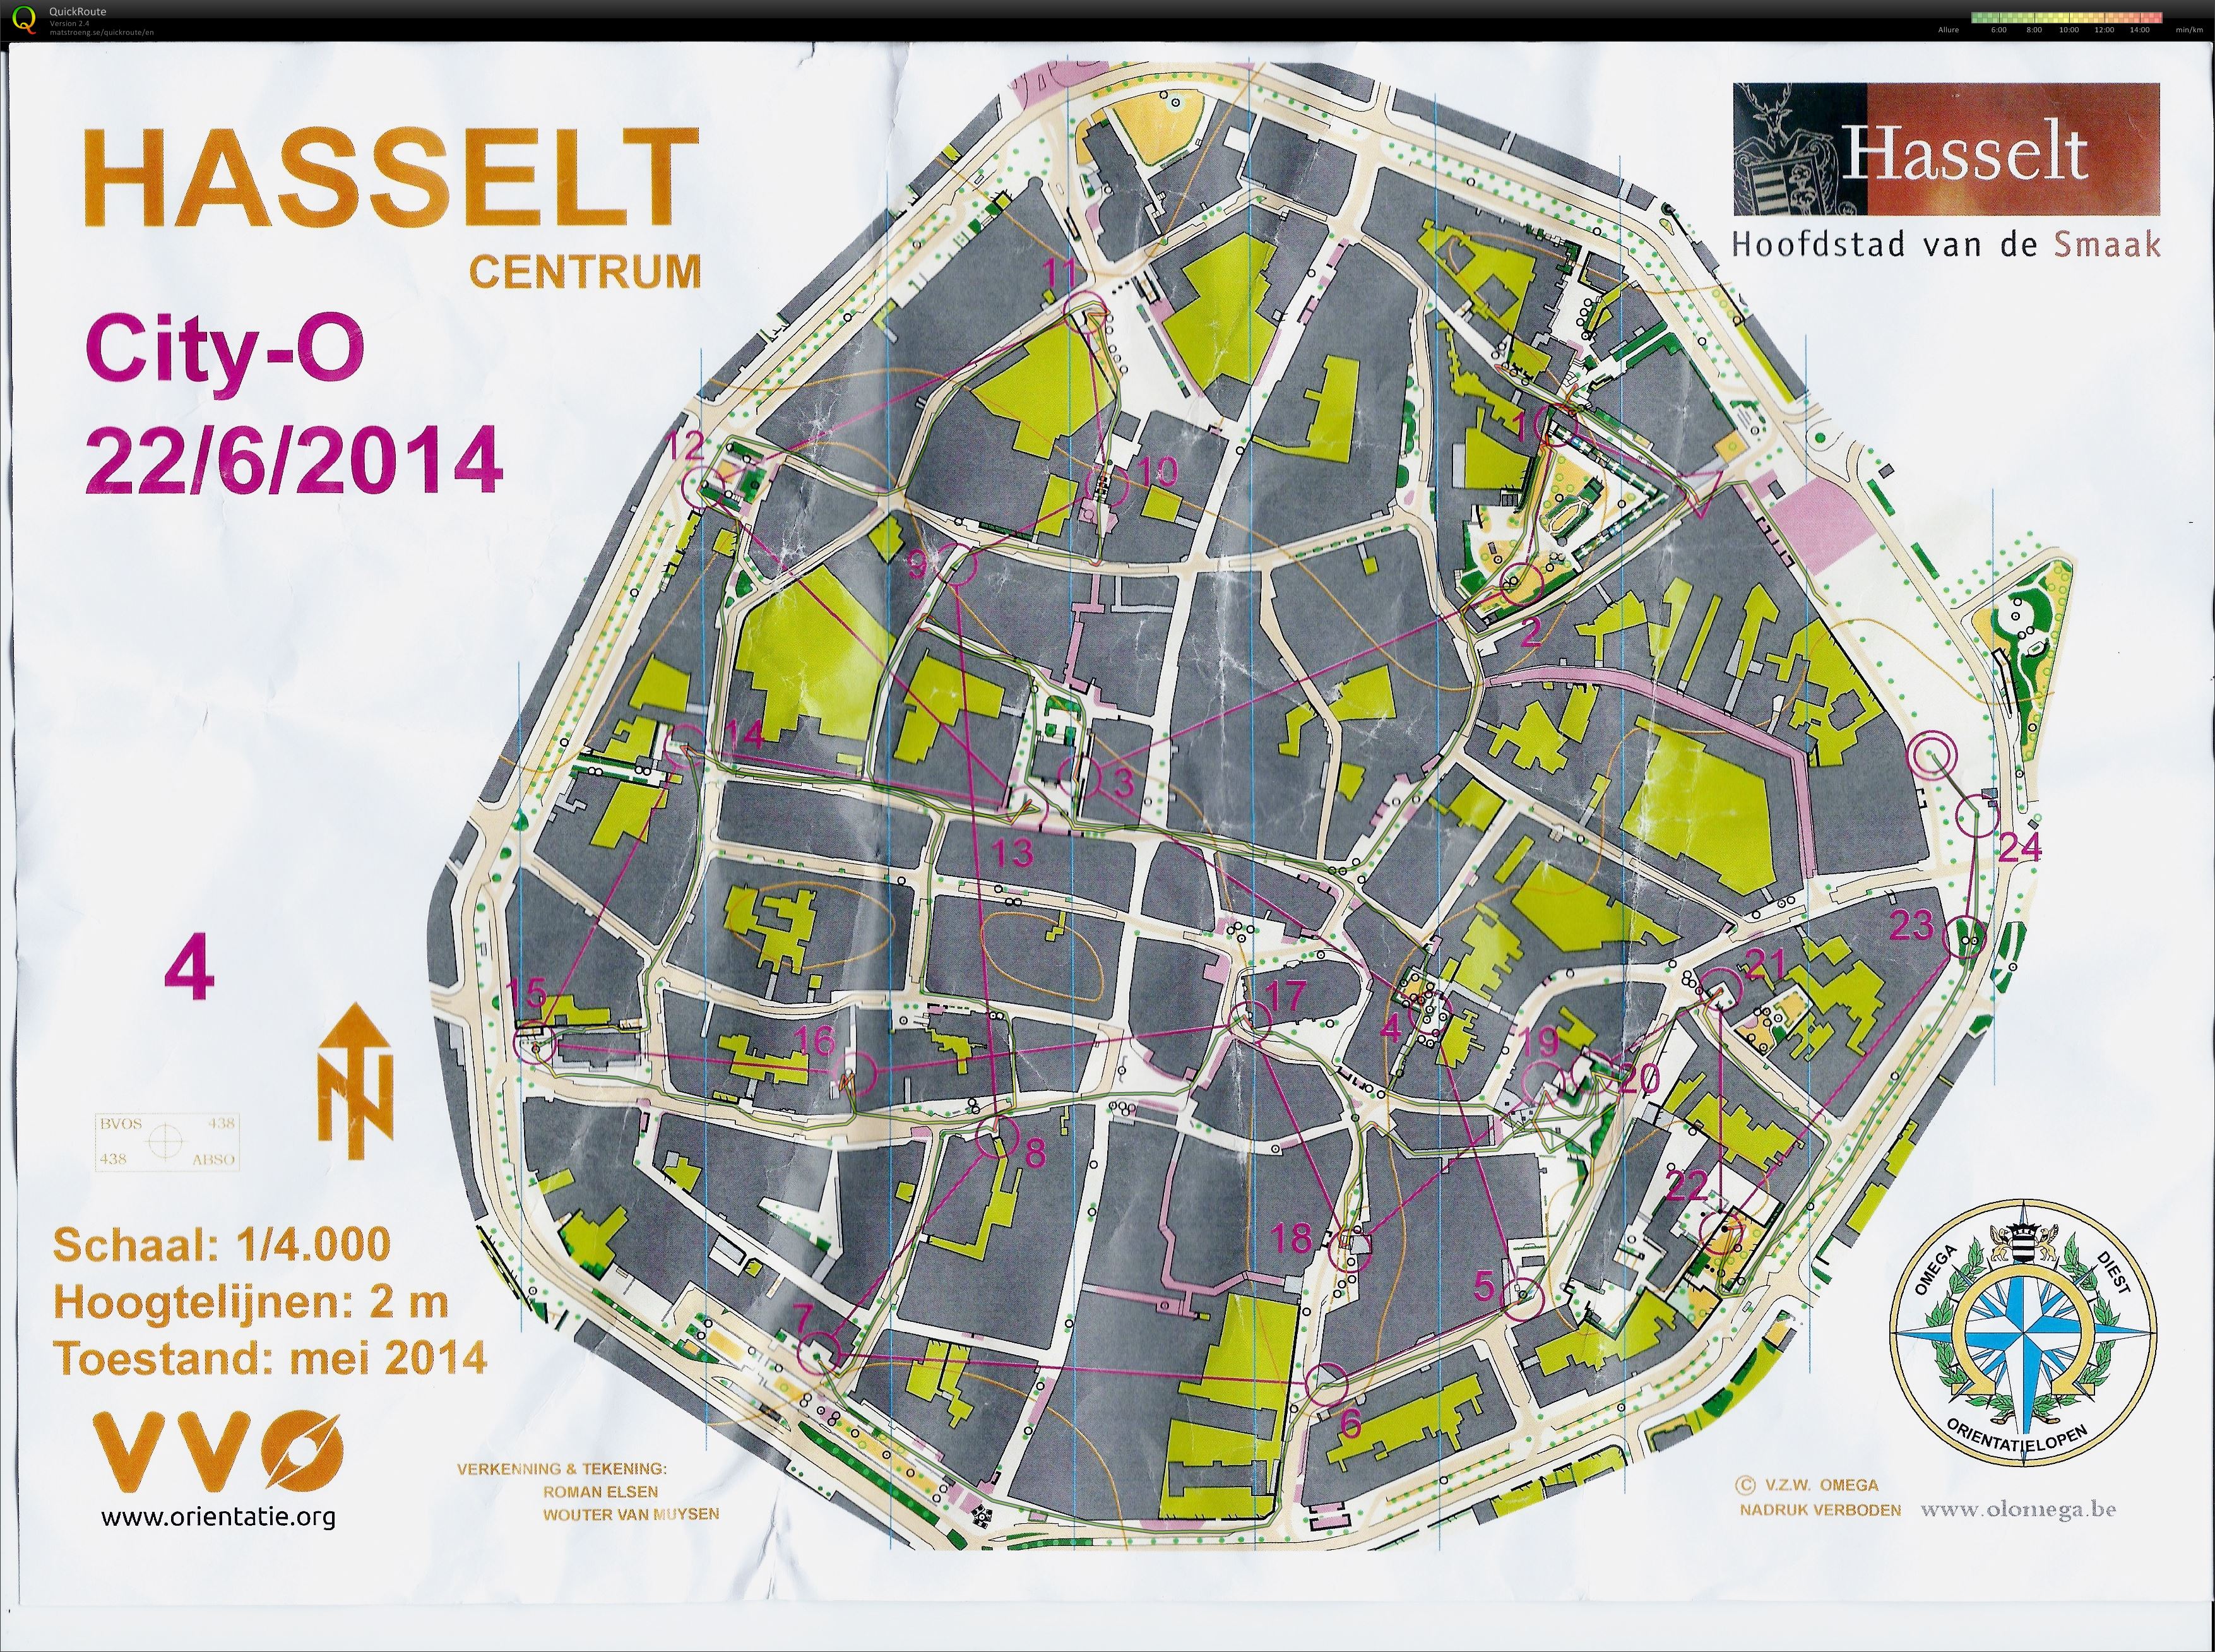 Hasselt centrum (22/06/2014)